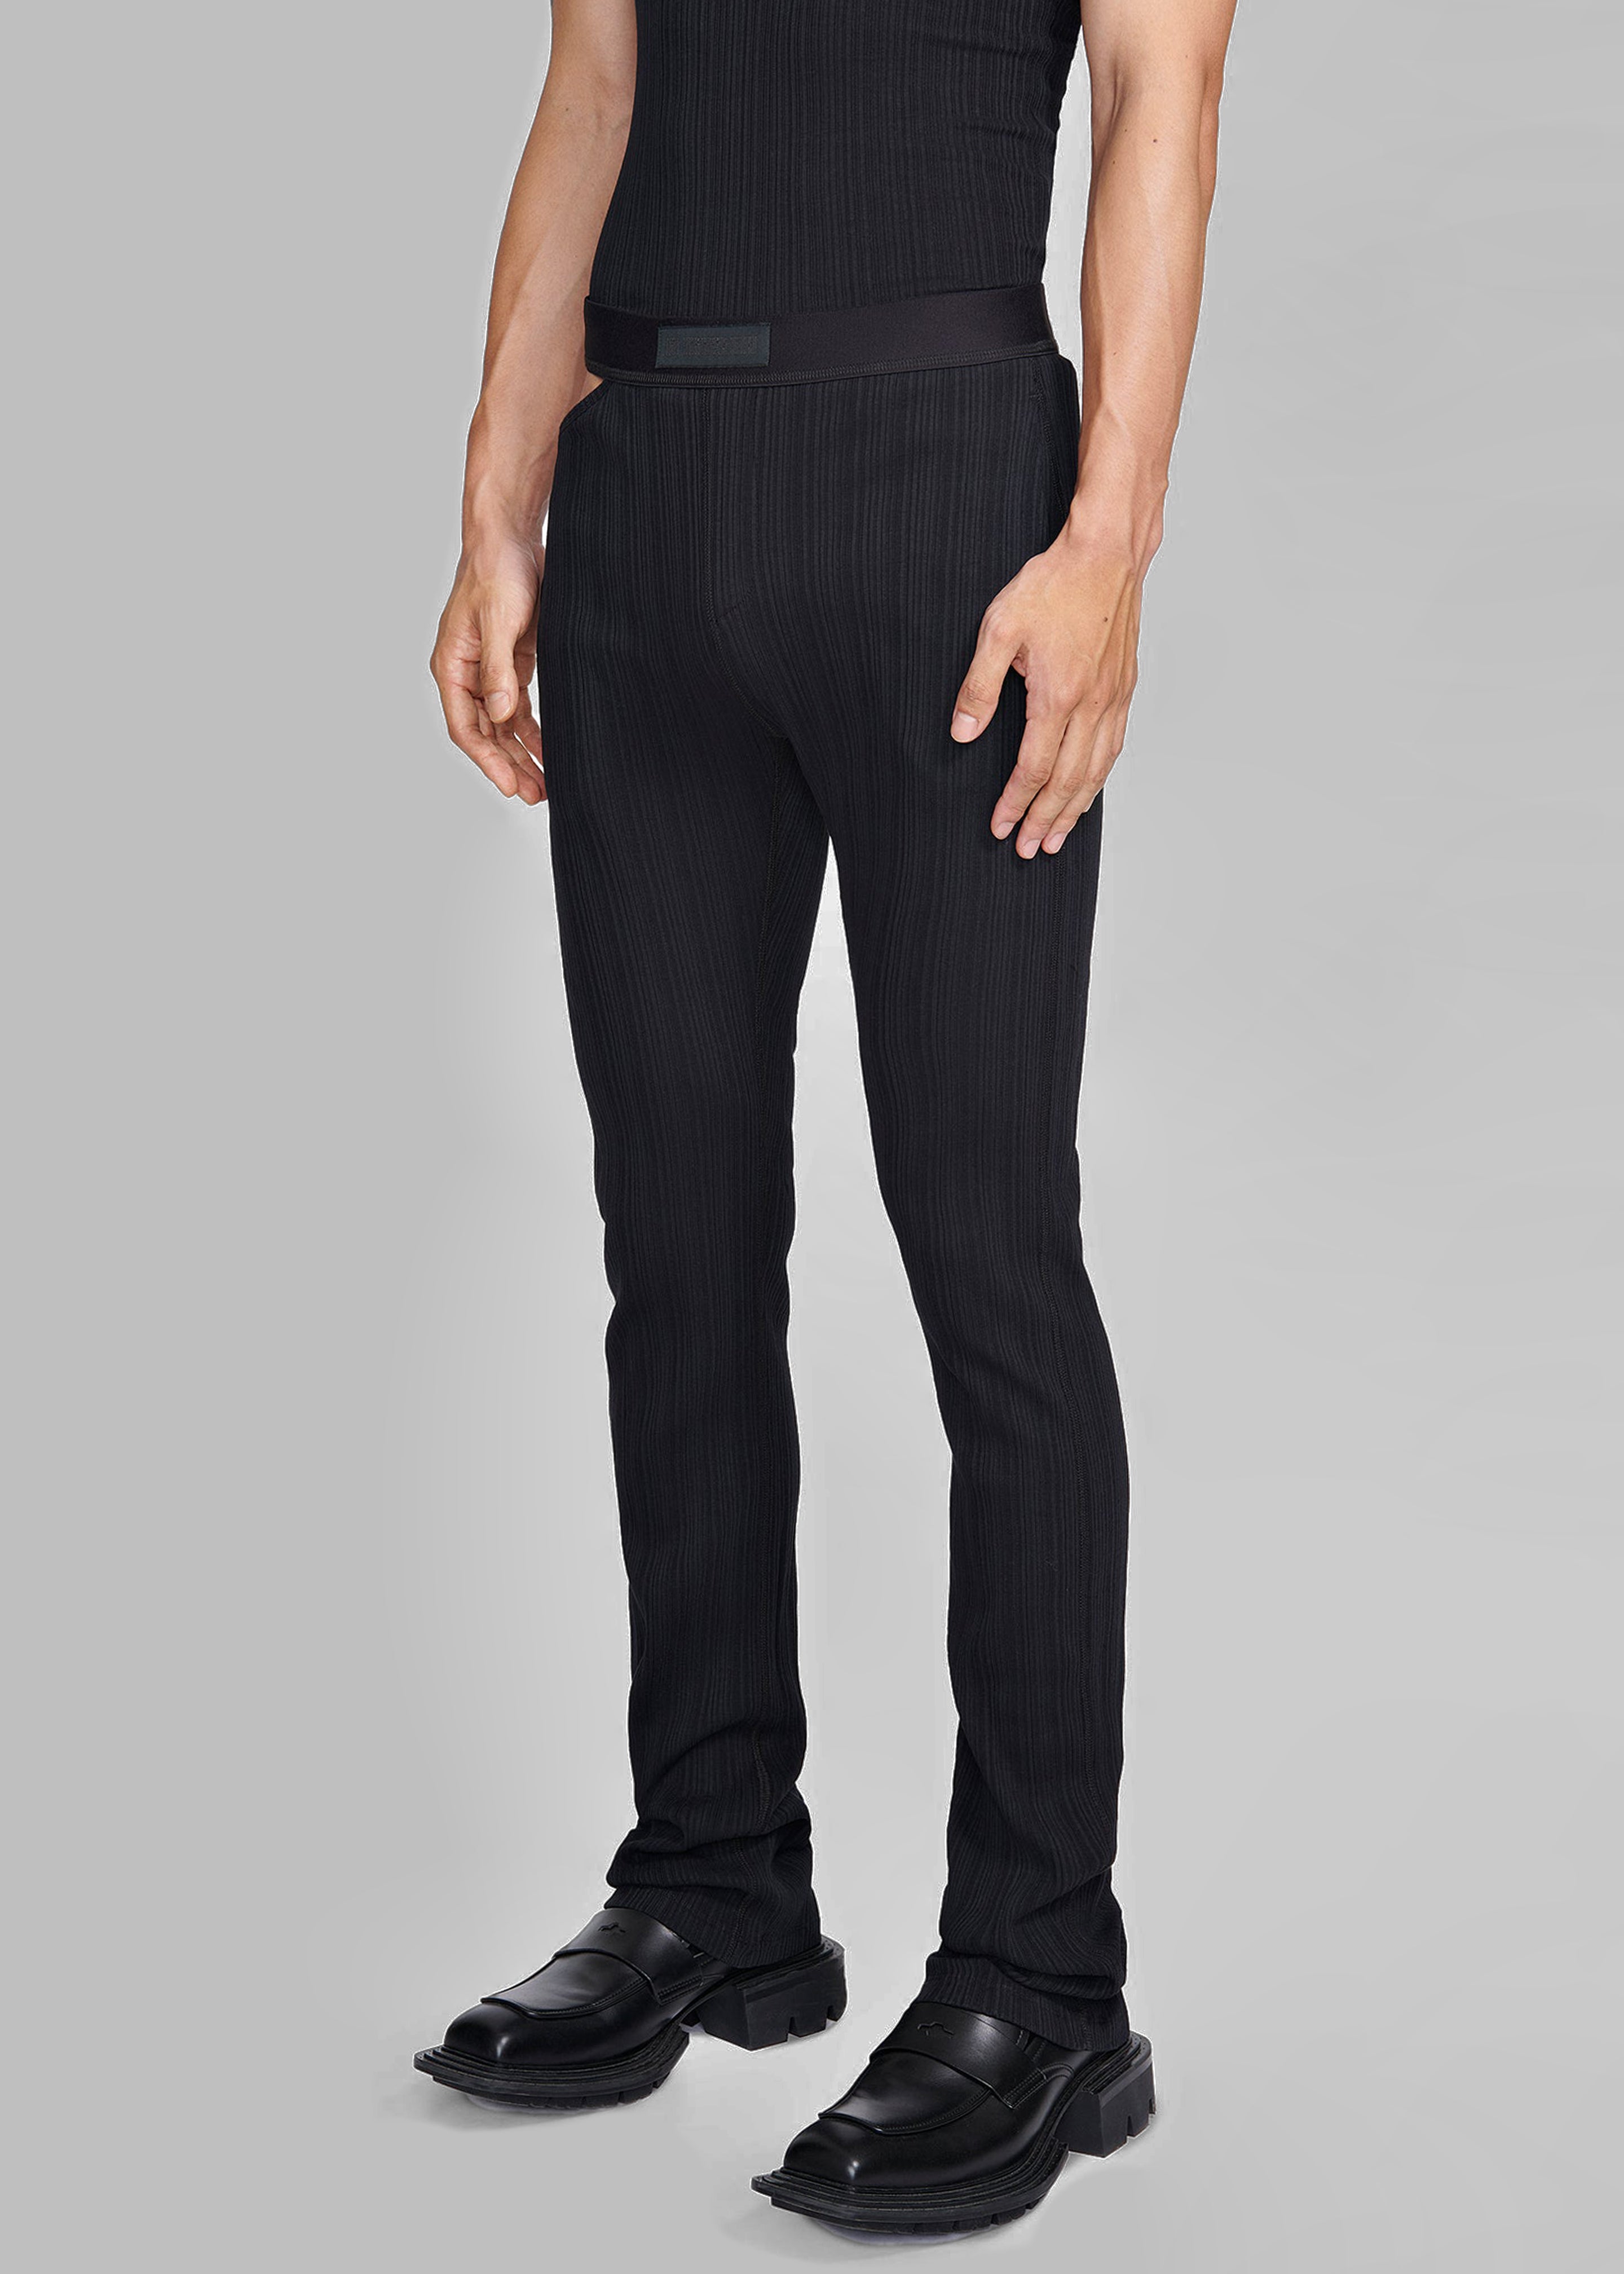 Louis Gabriel Nouchi Flared Loungewear Pants With Signature Opening - Black - 2